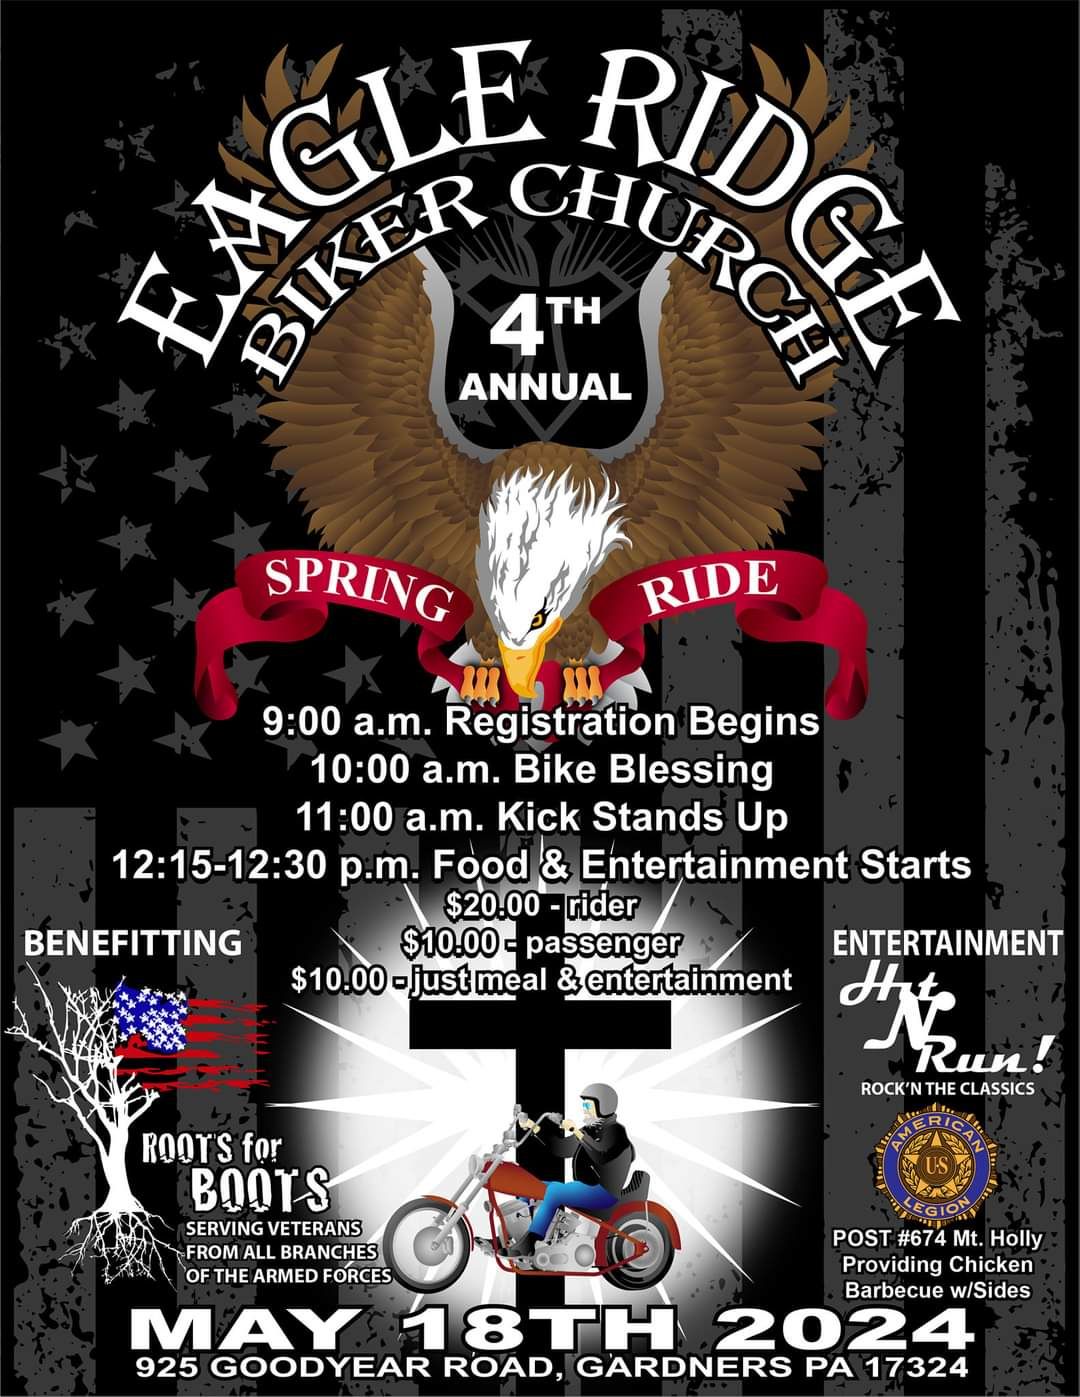 Eagle Ridge Biker Church Spring Ride